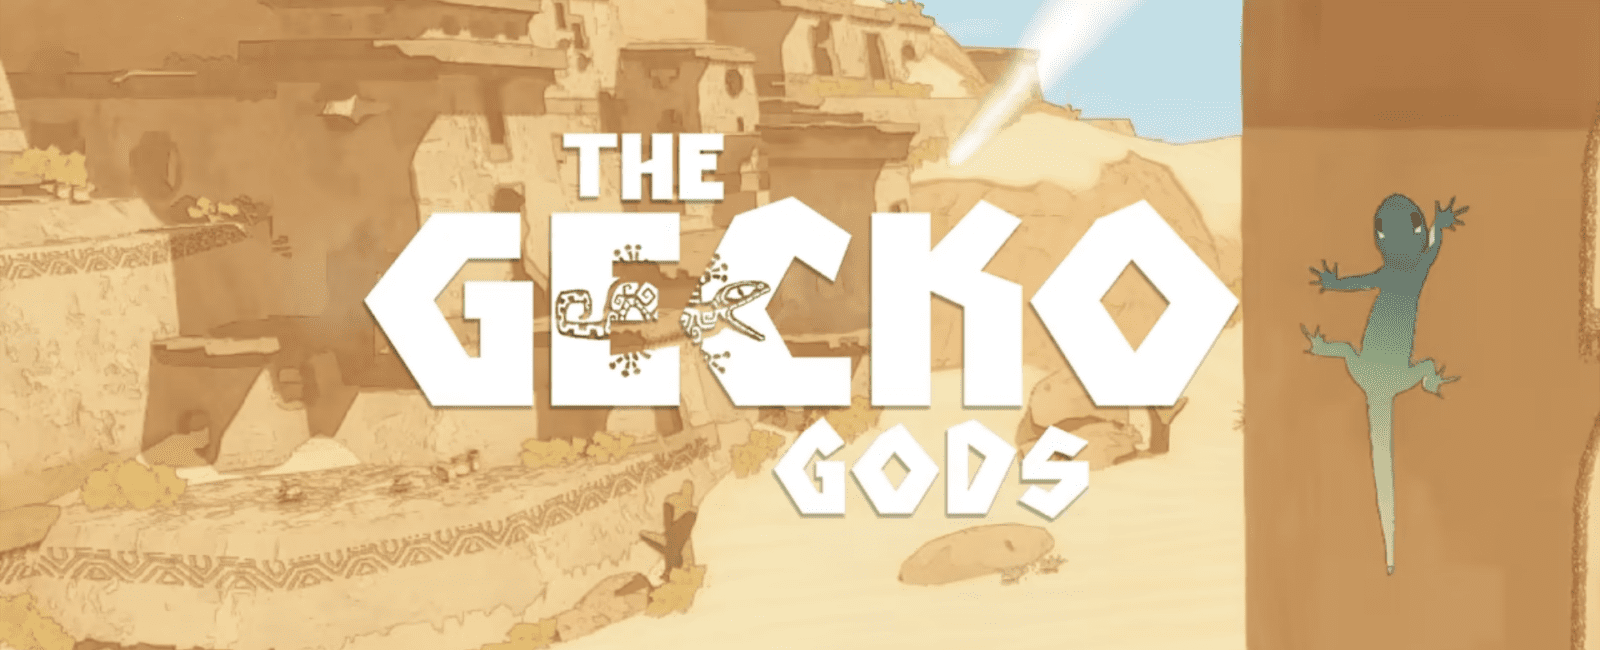 The-Gecko-Gods-Title-screen-puzzel-adventure-game-platform